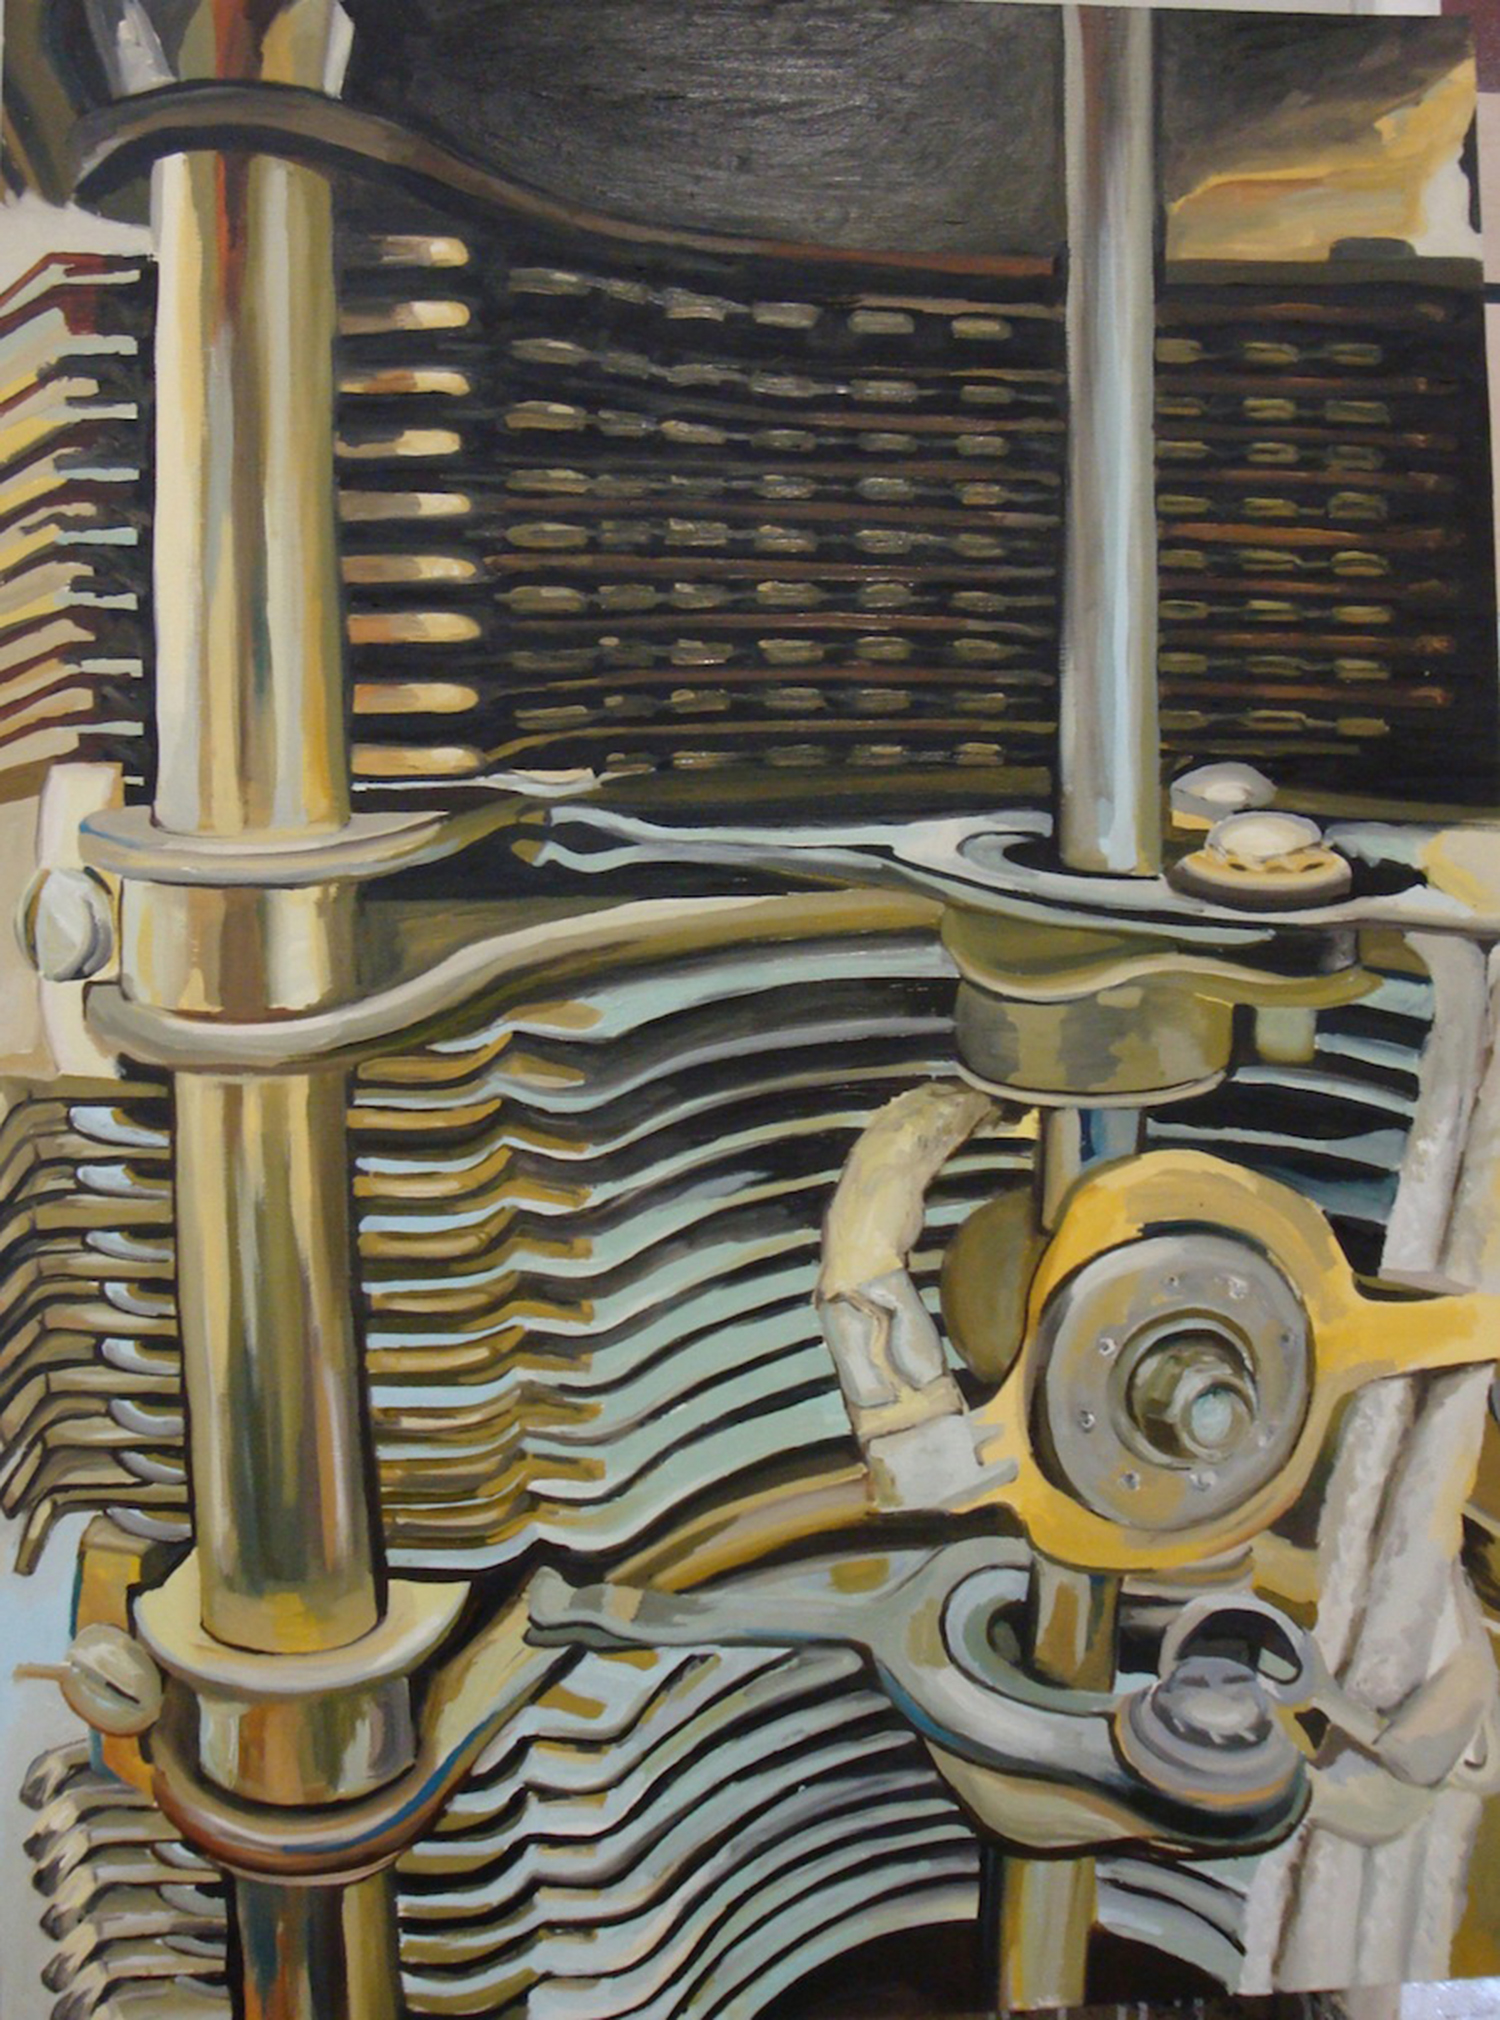 Abigail Lien, "Telephone Object #1," oil on panel, 30" x 40", 2013.